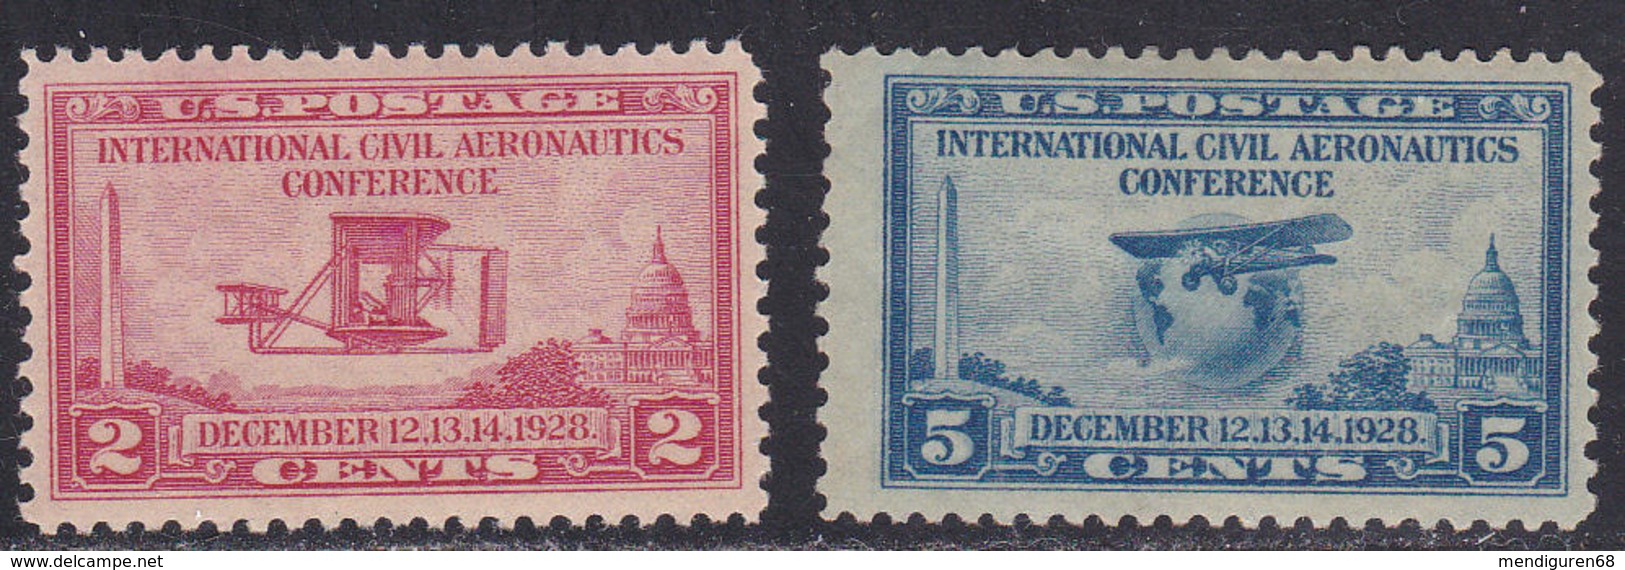 USA 1927 AeronautiCs ConfereNce Set 2v.MNH SC 649-50 YV 279-80 MI 314-15 SG 652-53 - Unused Stamps